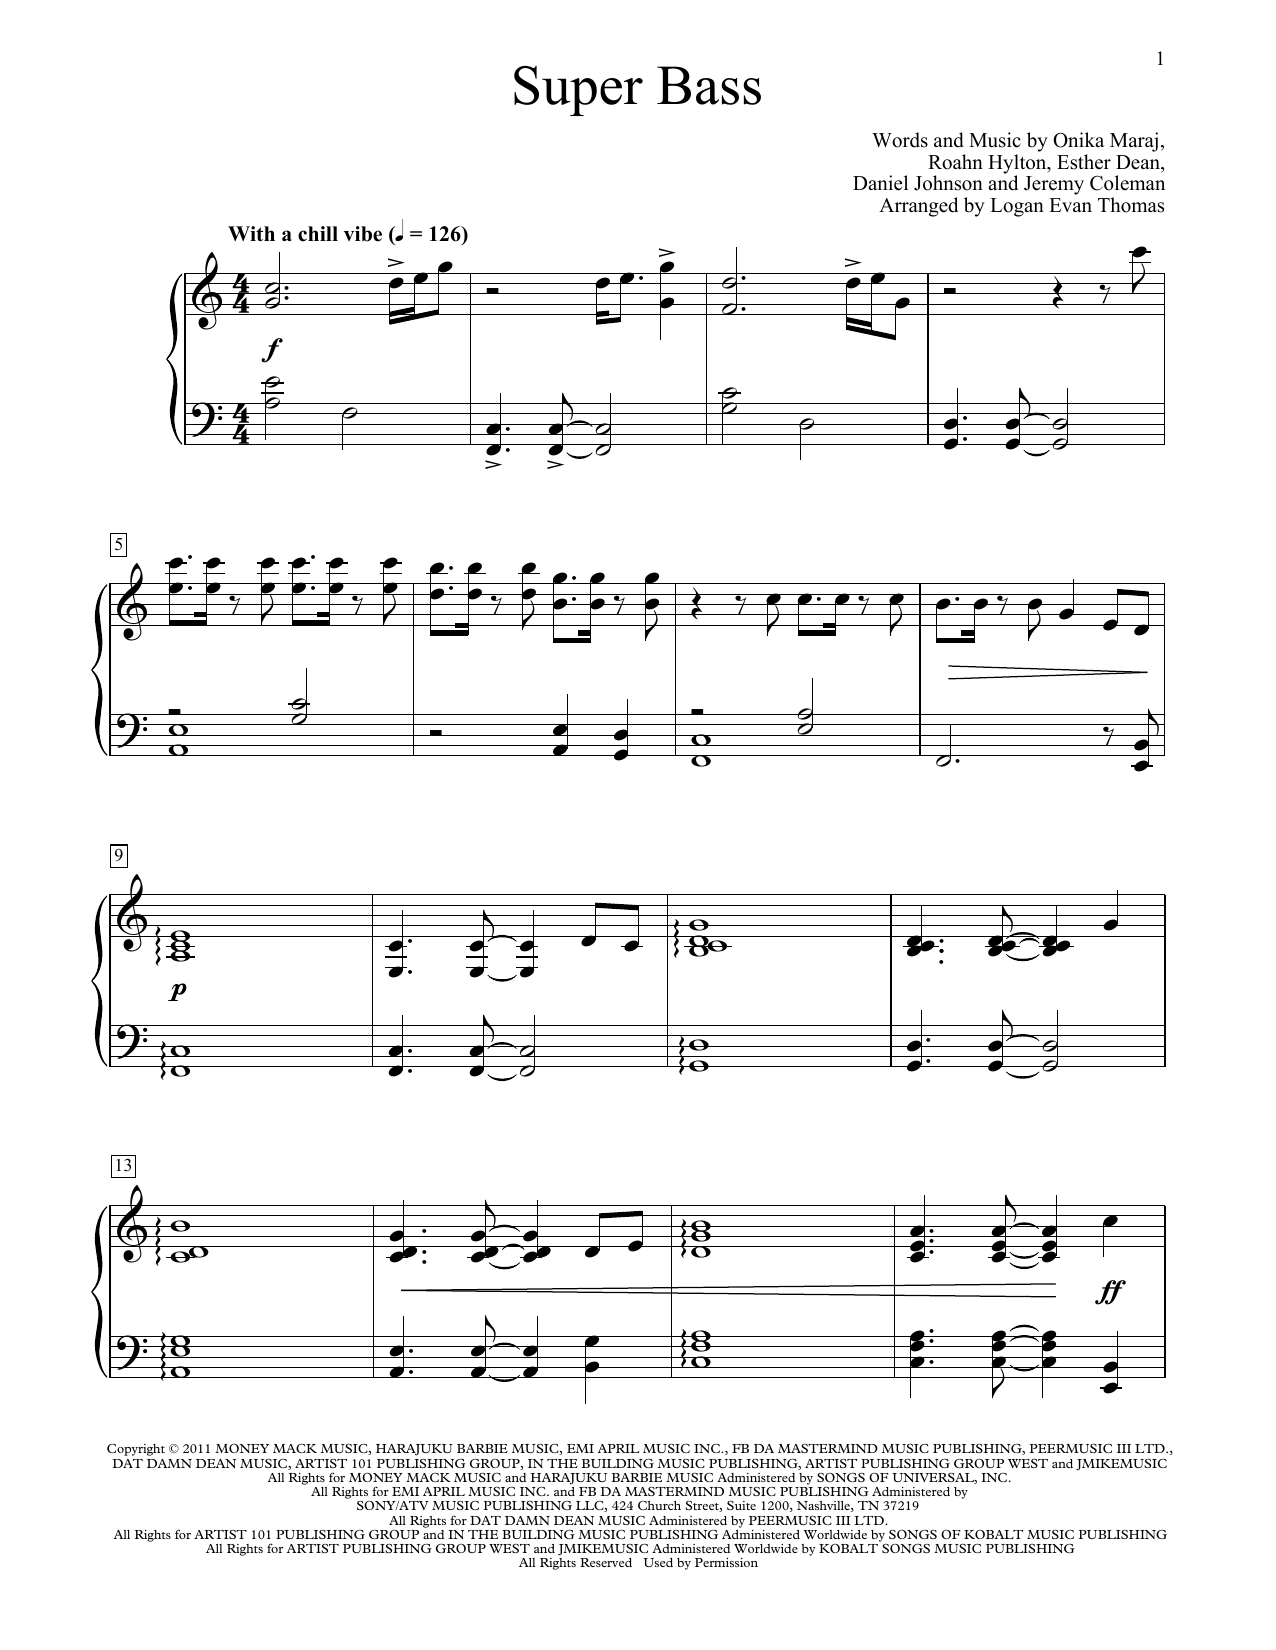 Download Nicki Minaj Super Bass (arr. Logan Evan Thomas) Sheet Music and learn how to play Educational Piano PDF digital score in minutes